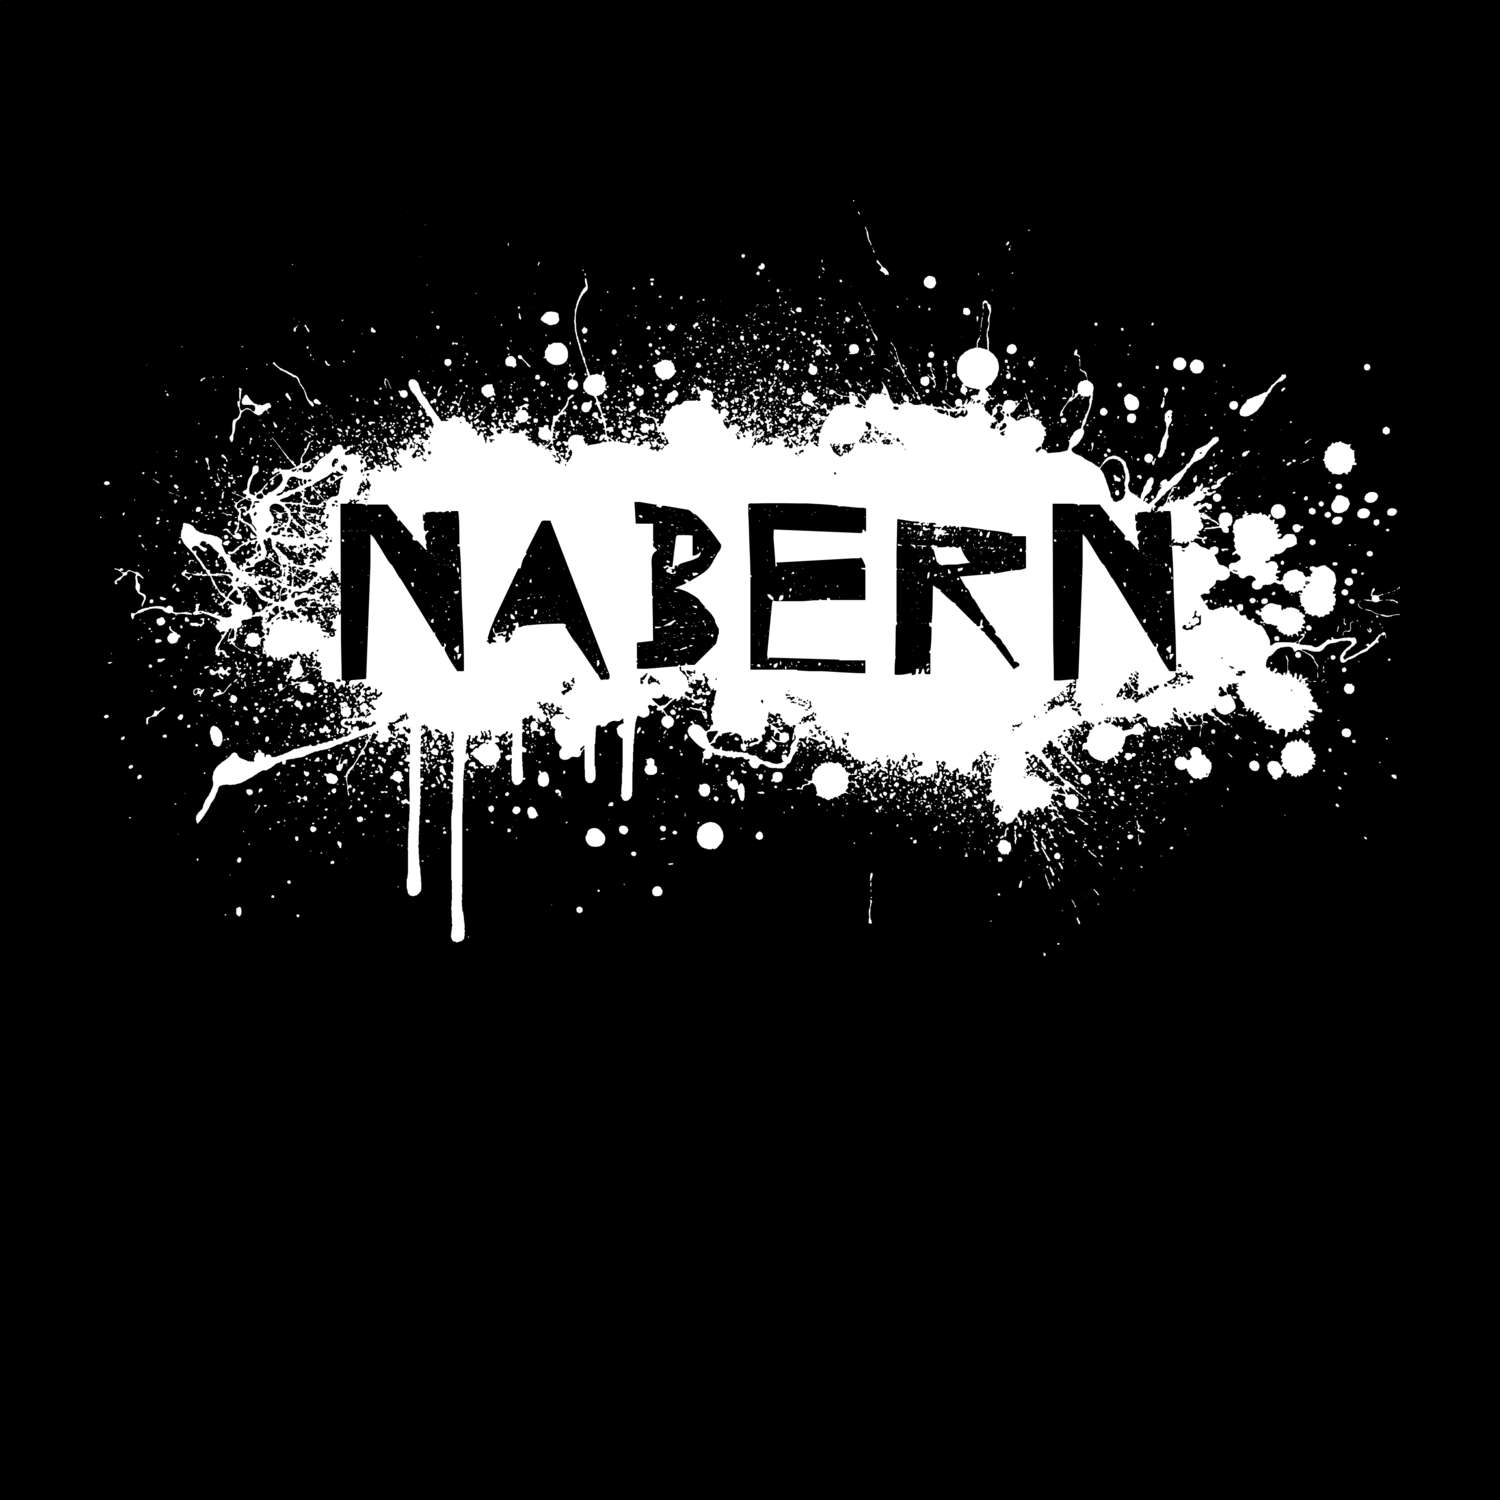 Nabern T-Shirt »Paint Splash Punk«